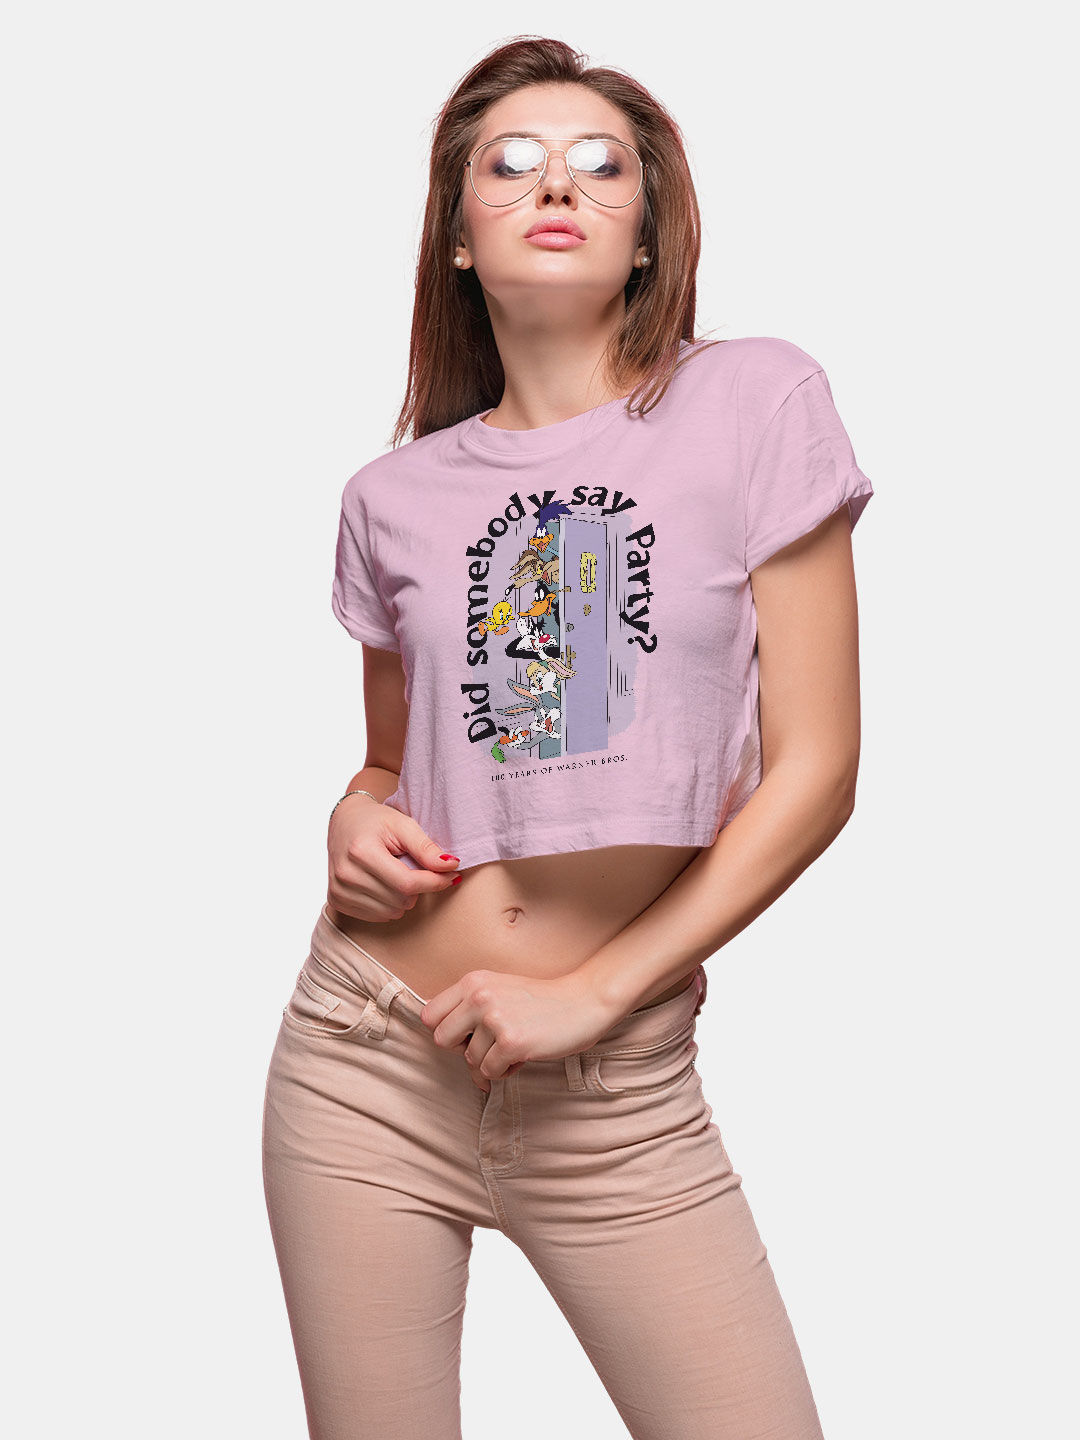 Buy Friends Party - Designer Crop Tops T-Shirts Online